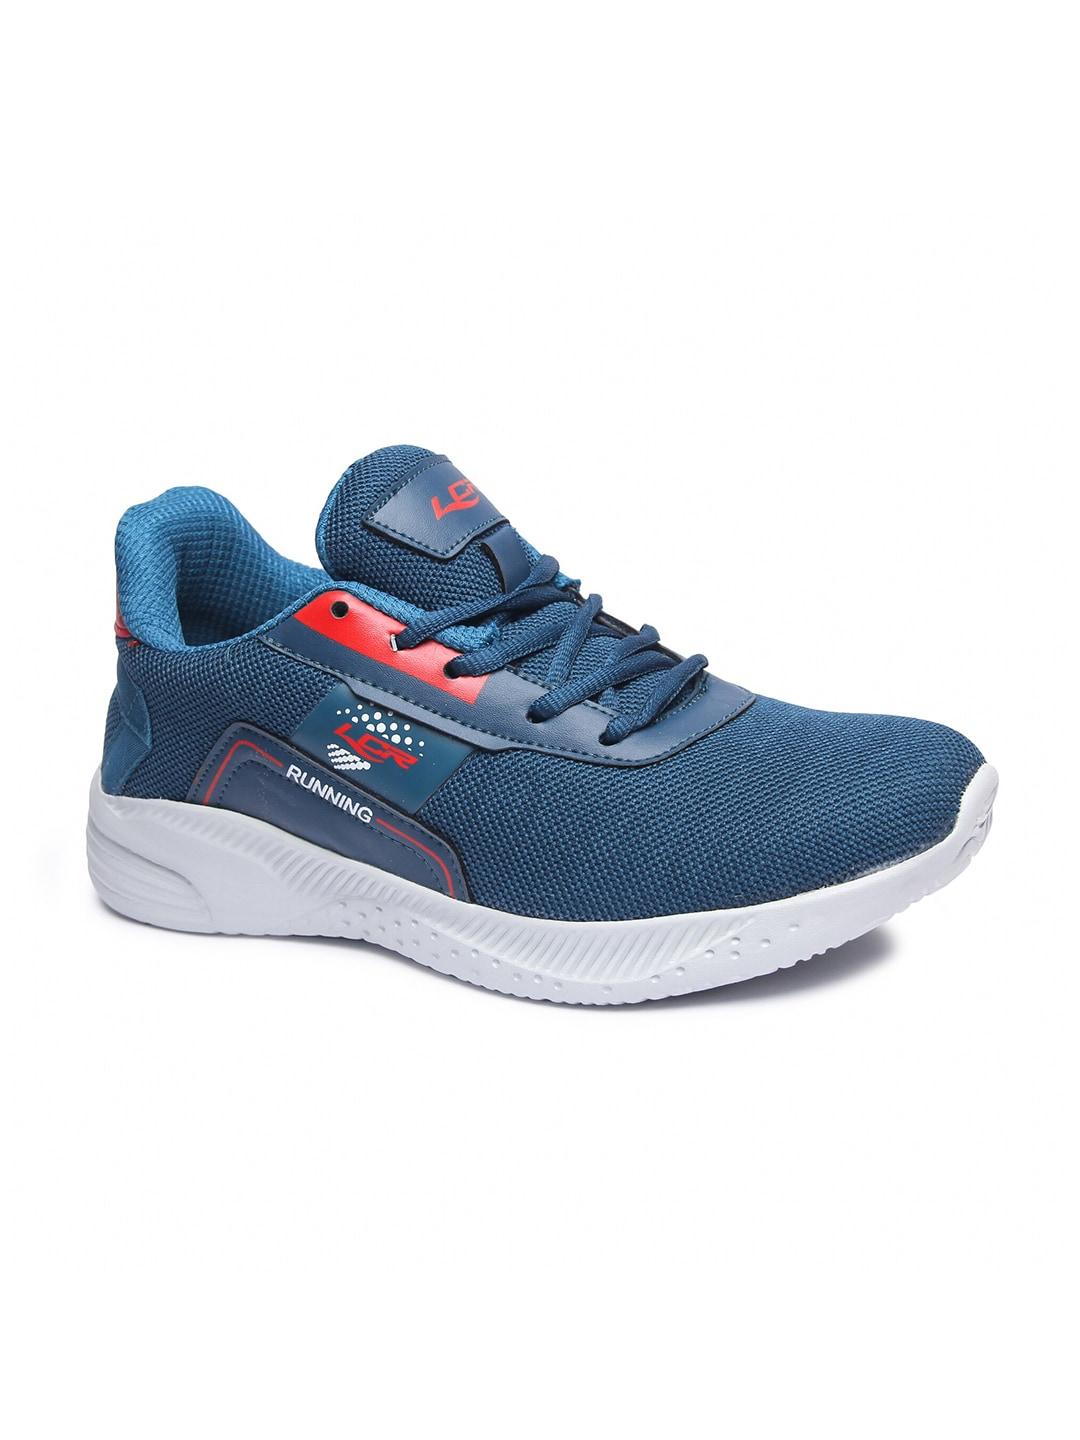 Lancer Men Blue Textile Running Non-Marking  Sports Shoes